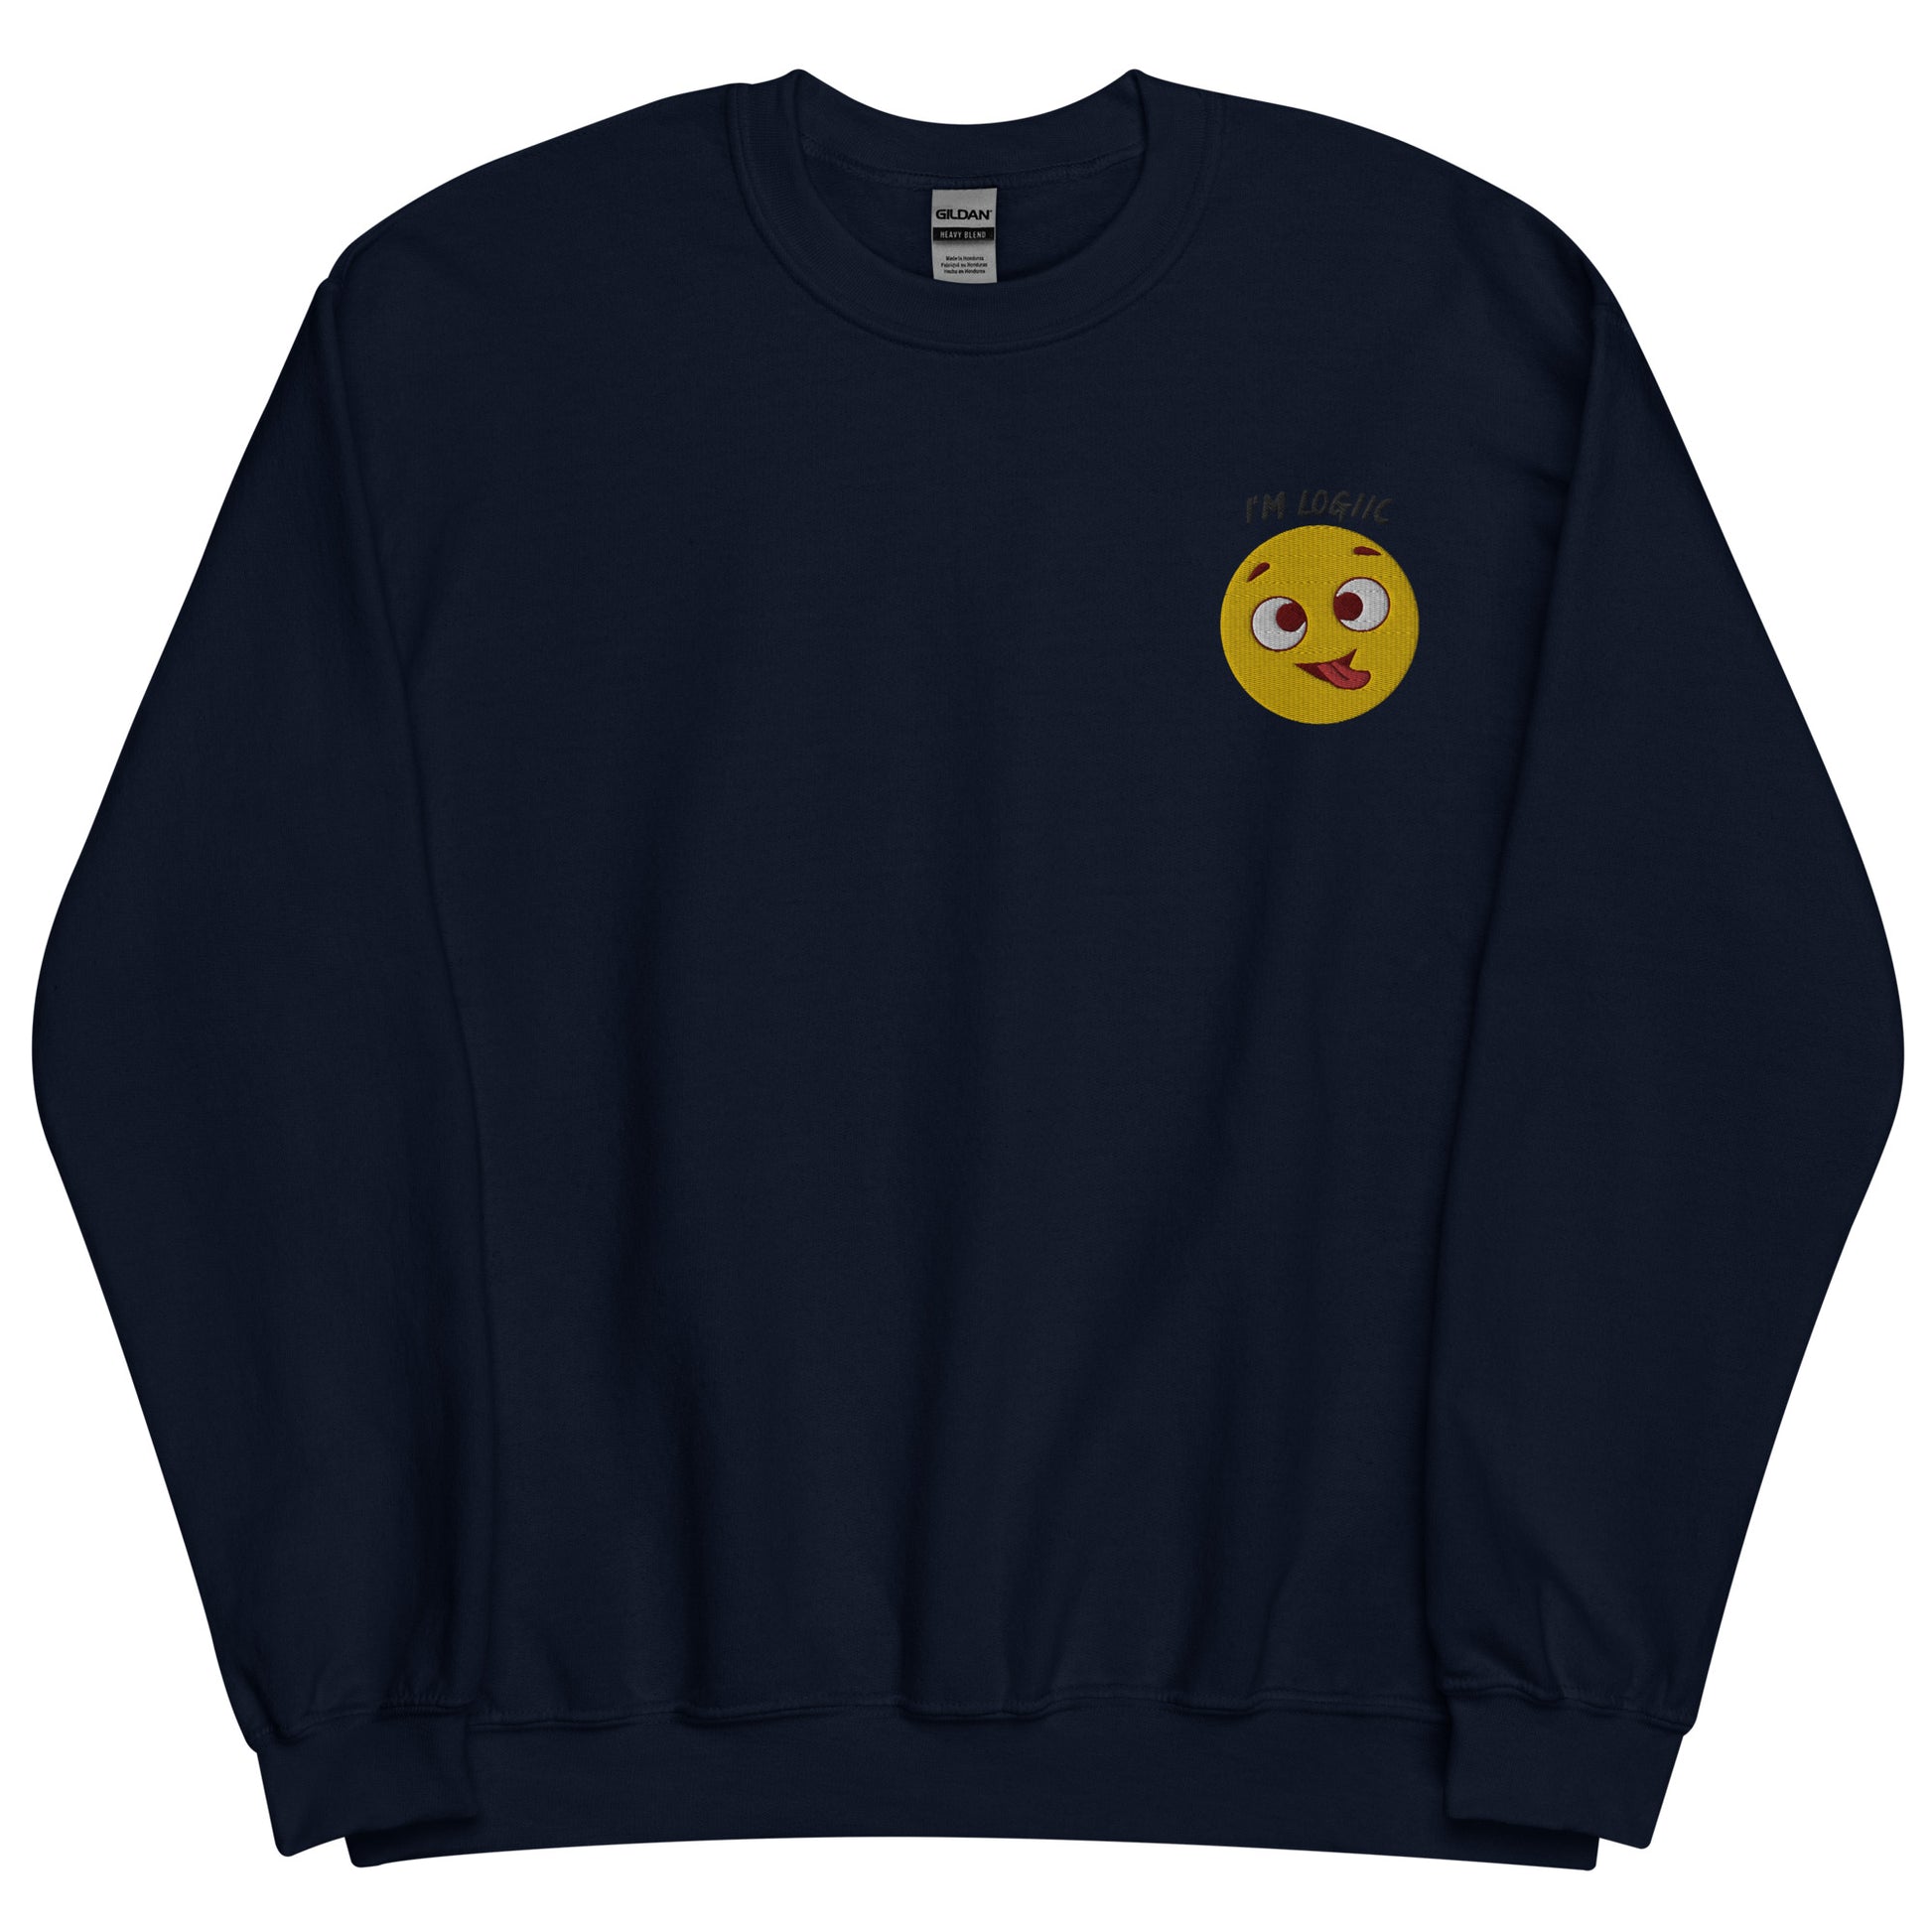 Silly Face Unisex Sweatshirt - Navy / S